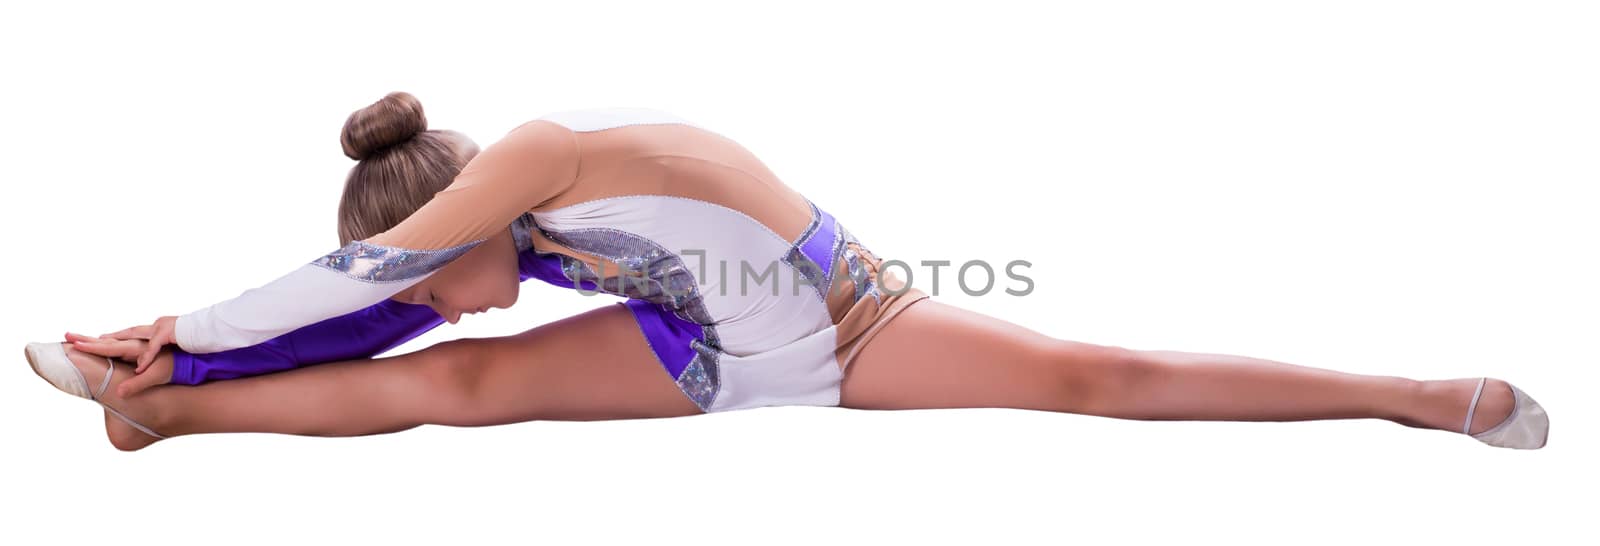 gymnast girl sitting on twine  by MegaArt